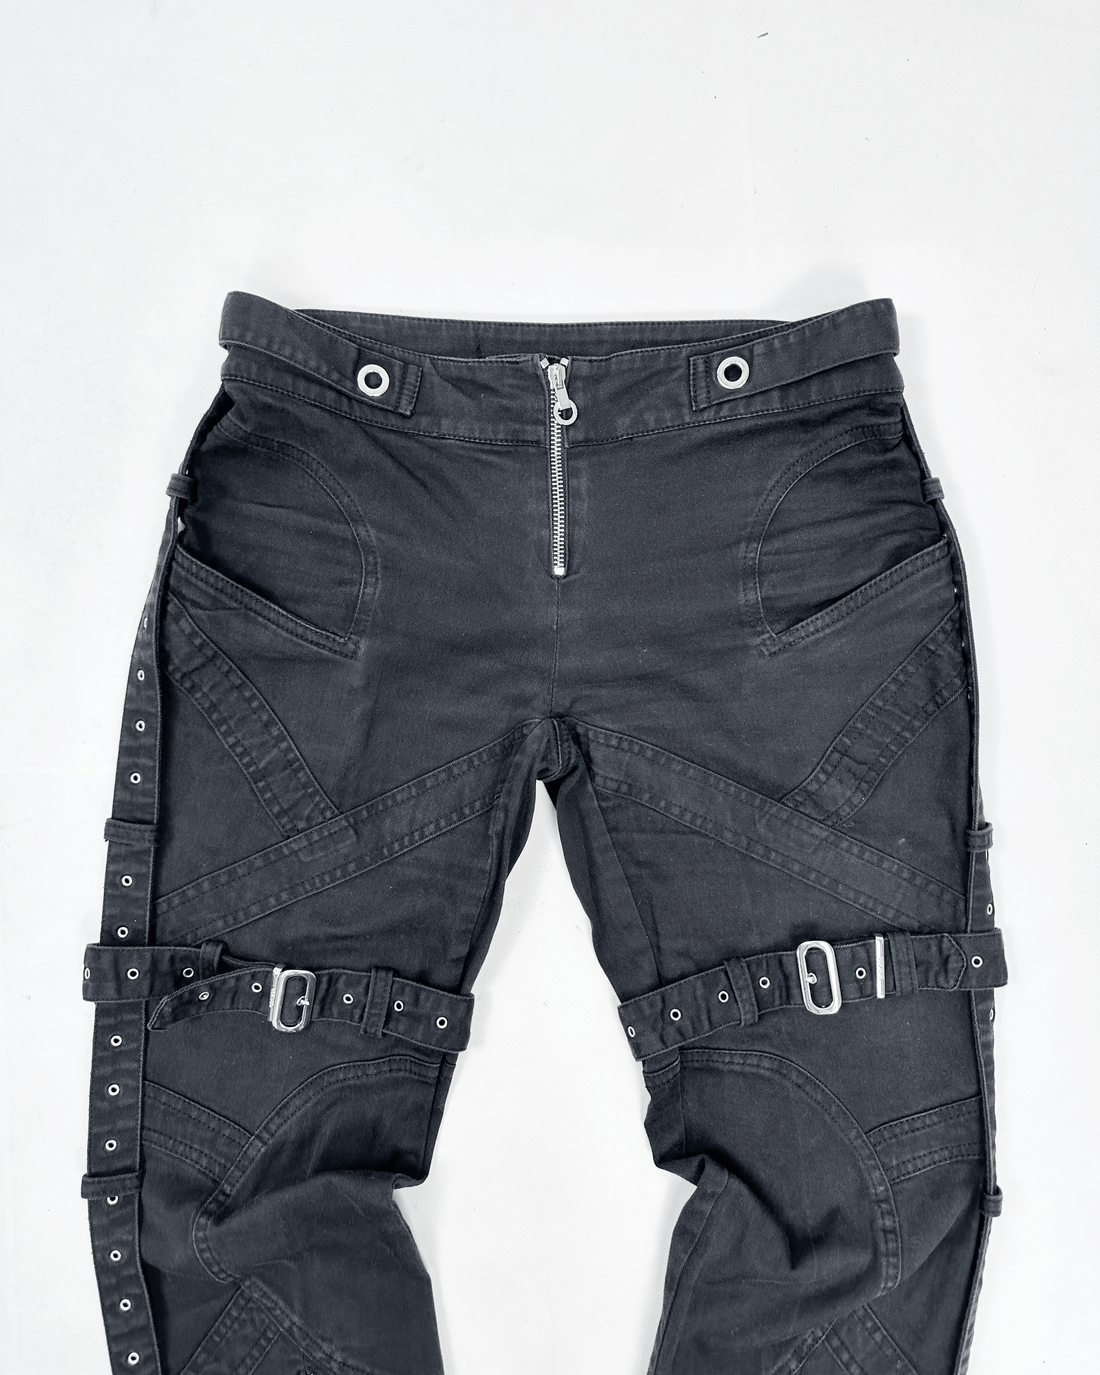 Versace Bondage Zipped Black Pants 2000's